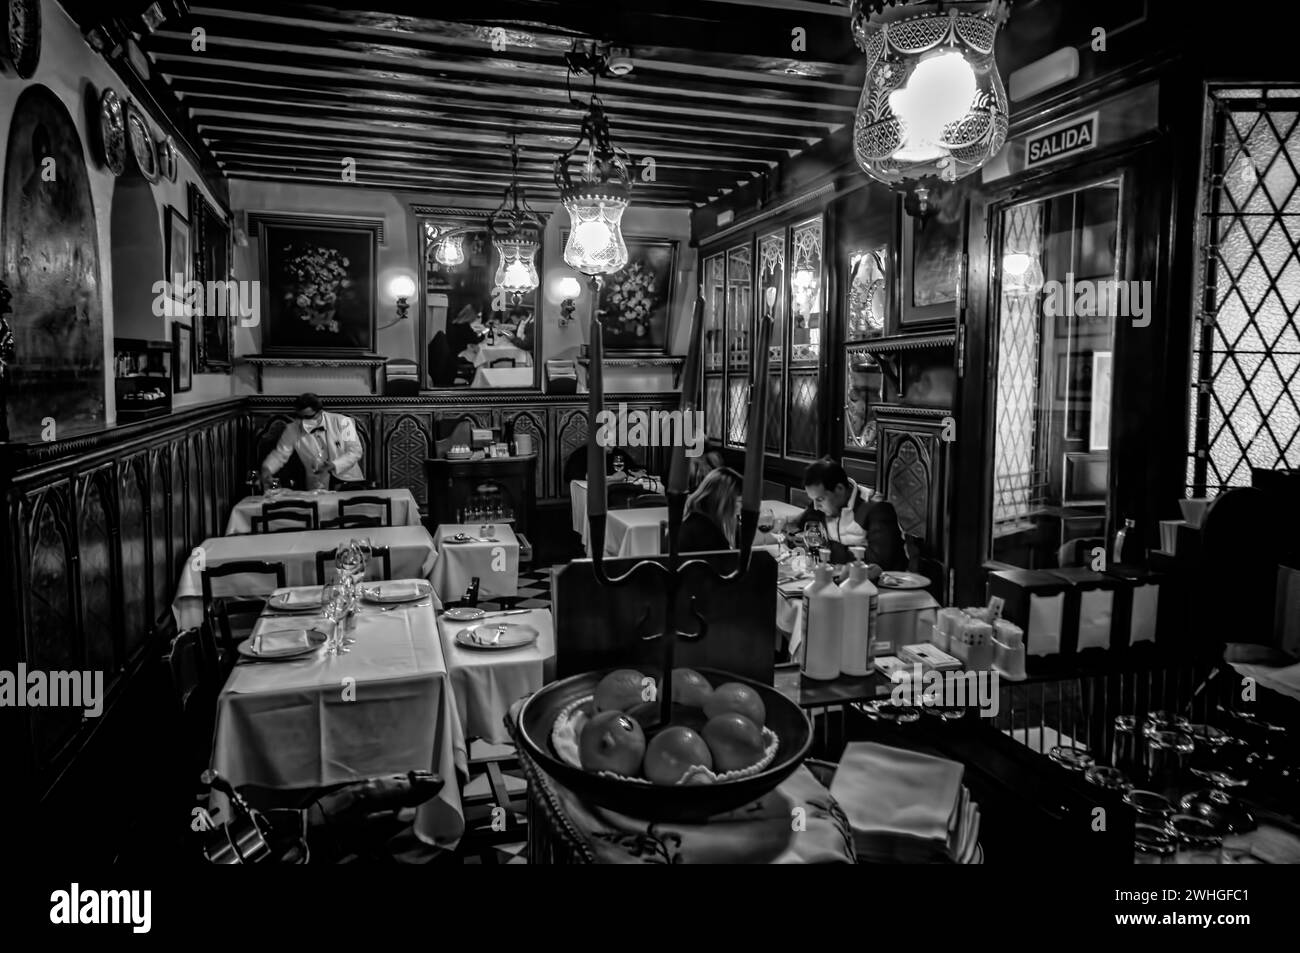 Interior of Sobrino de Botin, oldest restaurant in the world founded in 1725, near Plaza Mayor, Madrid, Spain. February 2022. Stock Photo